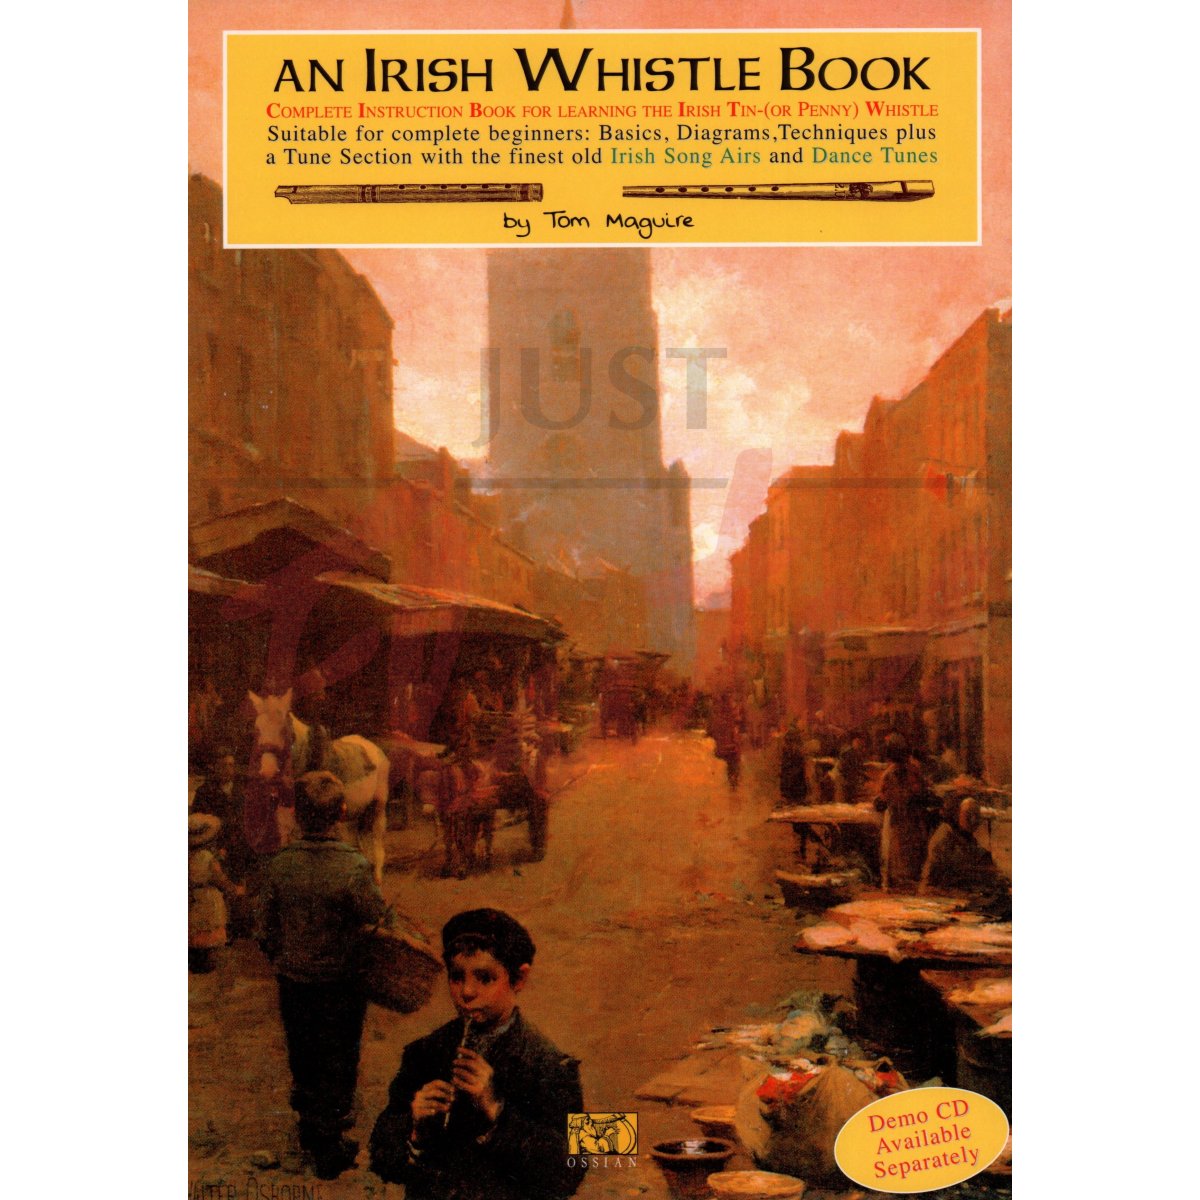 An Irish Whistle Book